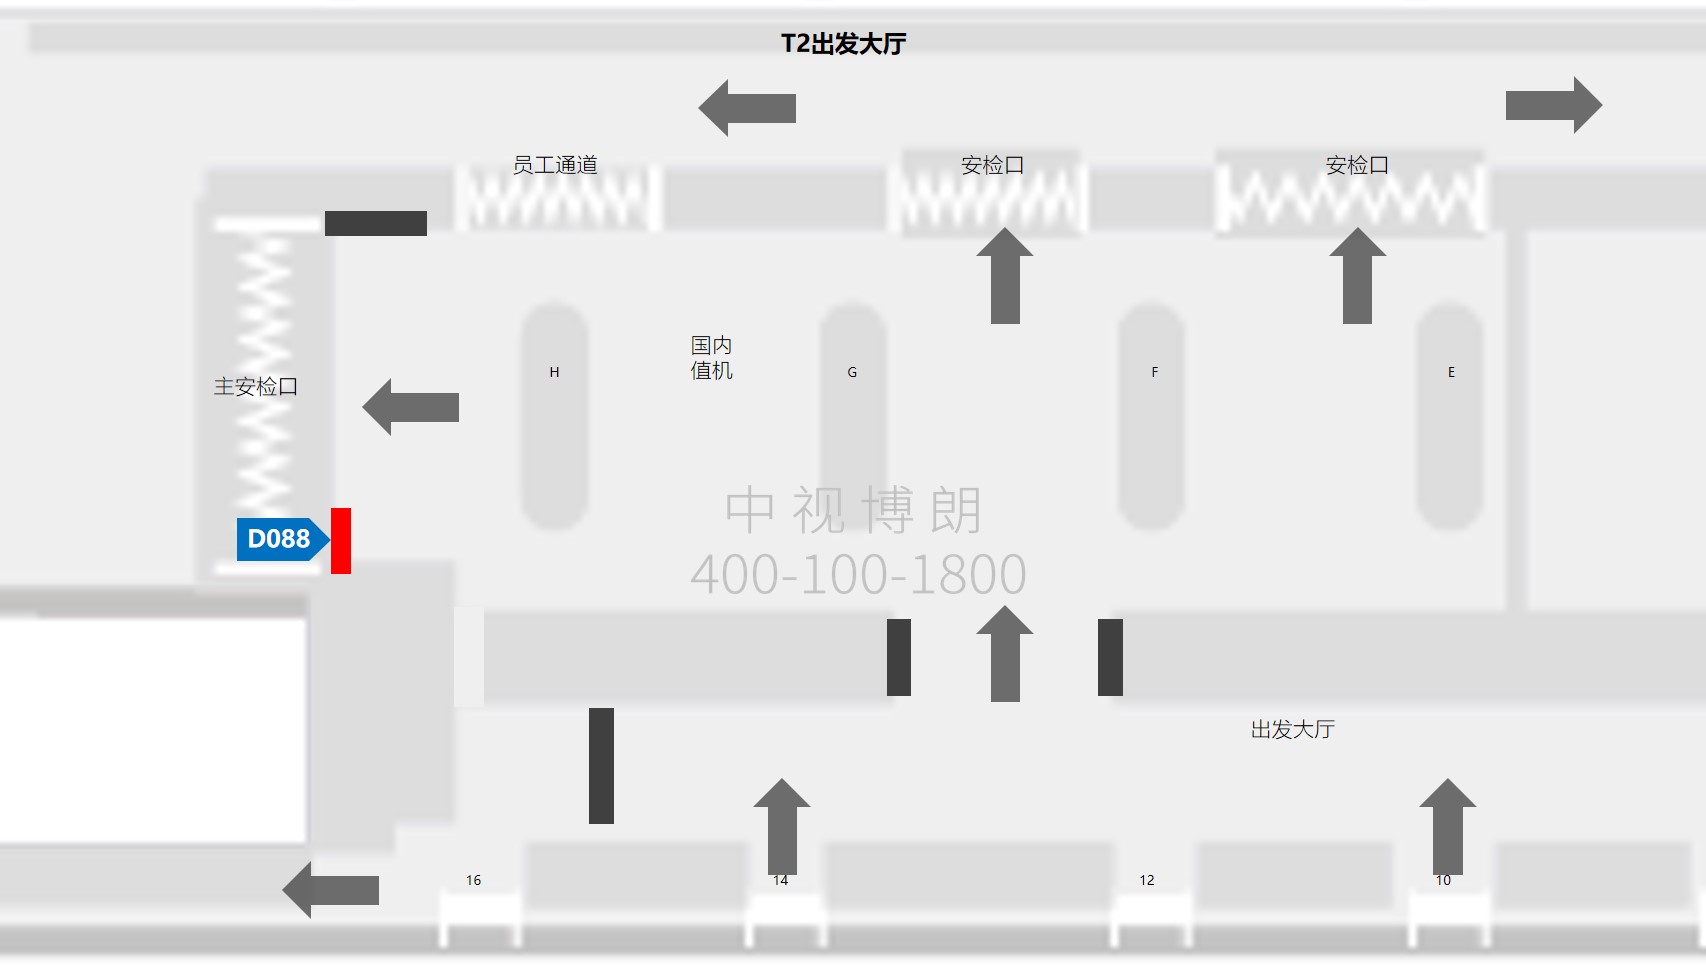 北京首都机场广告-T2 Domestic Security Checkpoint Light Box D088位置图